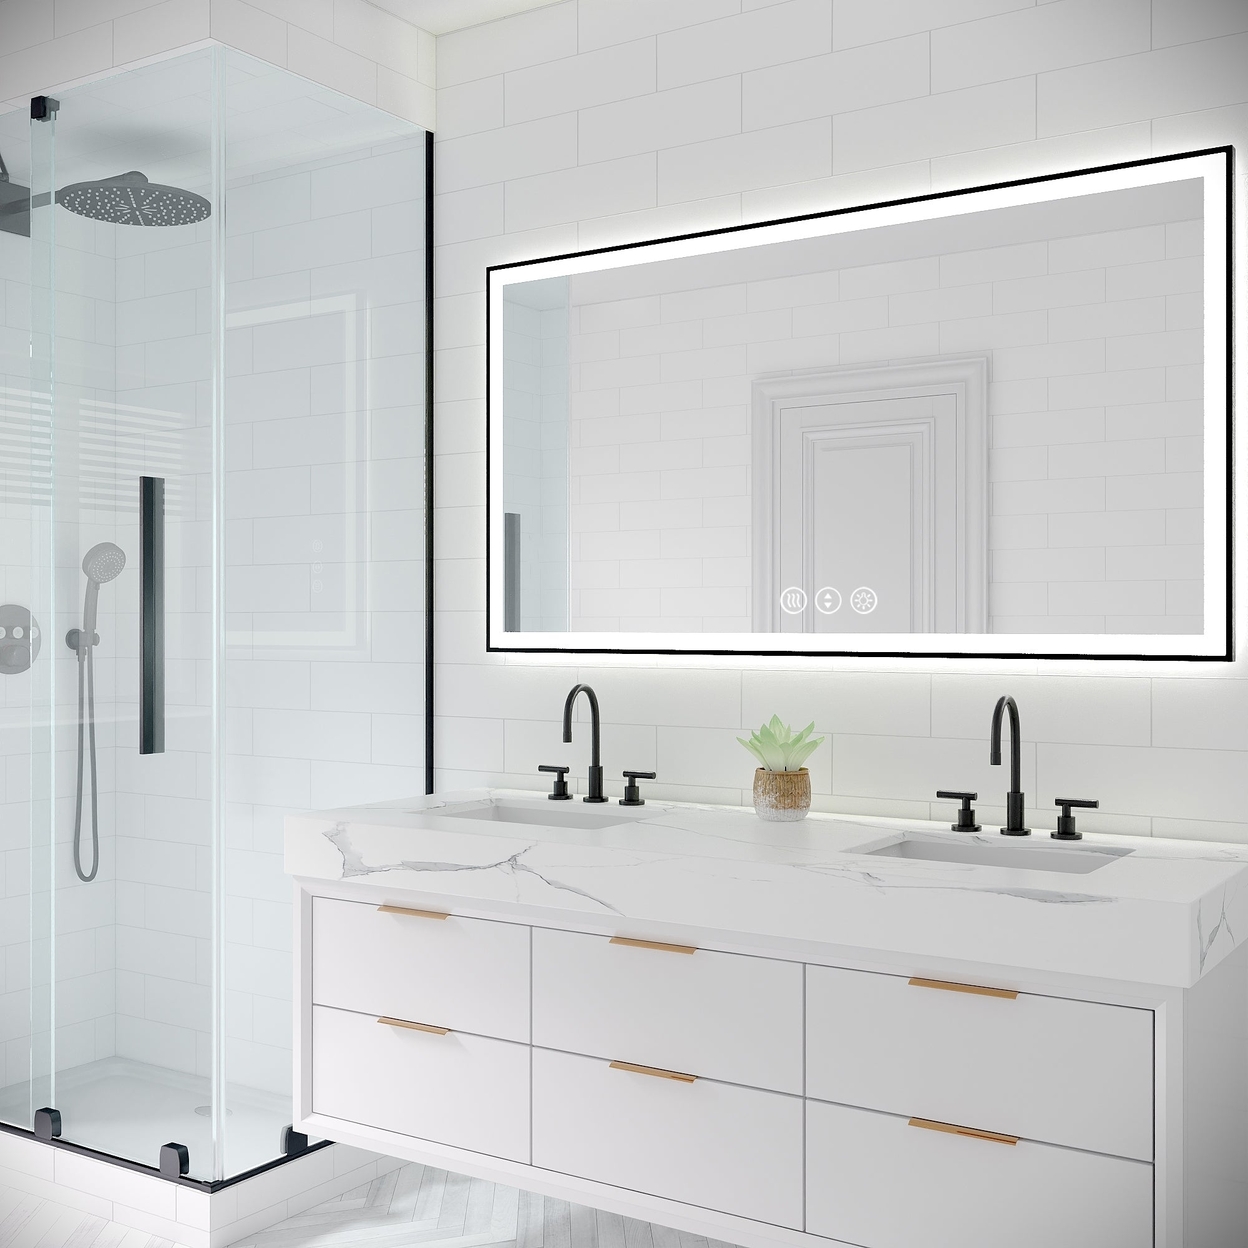 Apex-Noir 55x30 Framed LED Lighted Bathroom Mirror